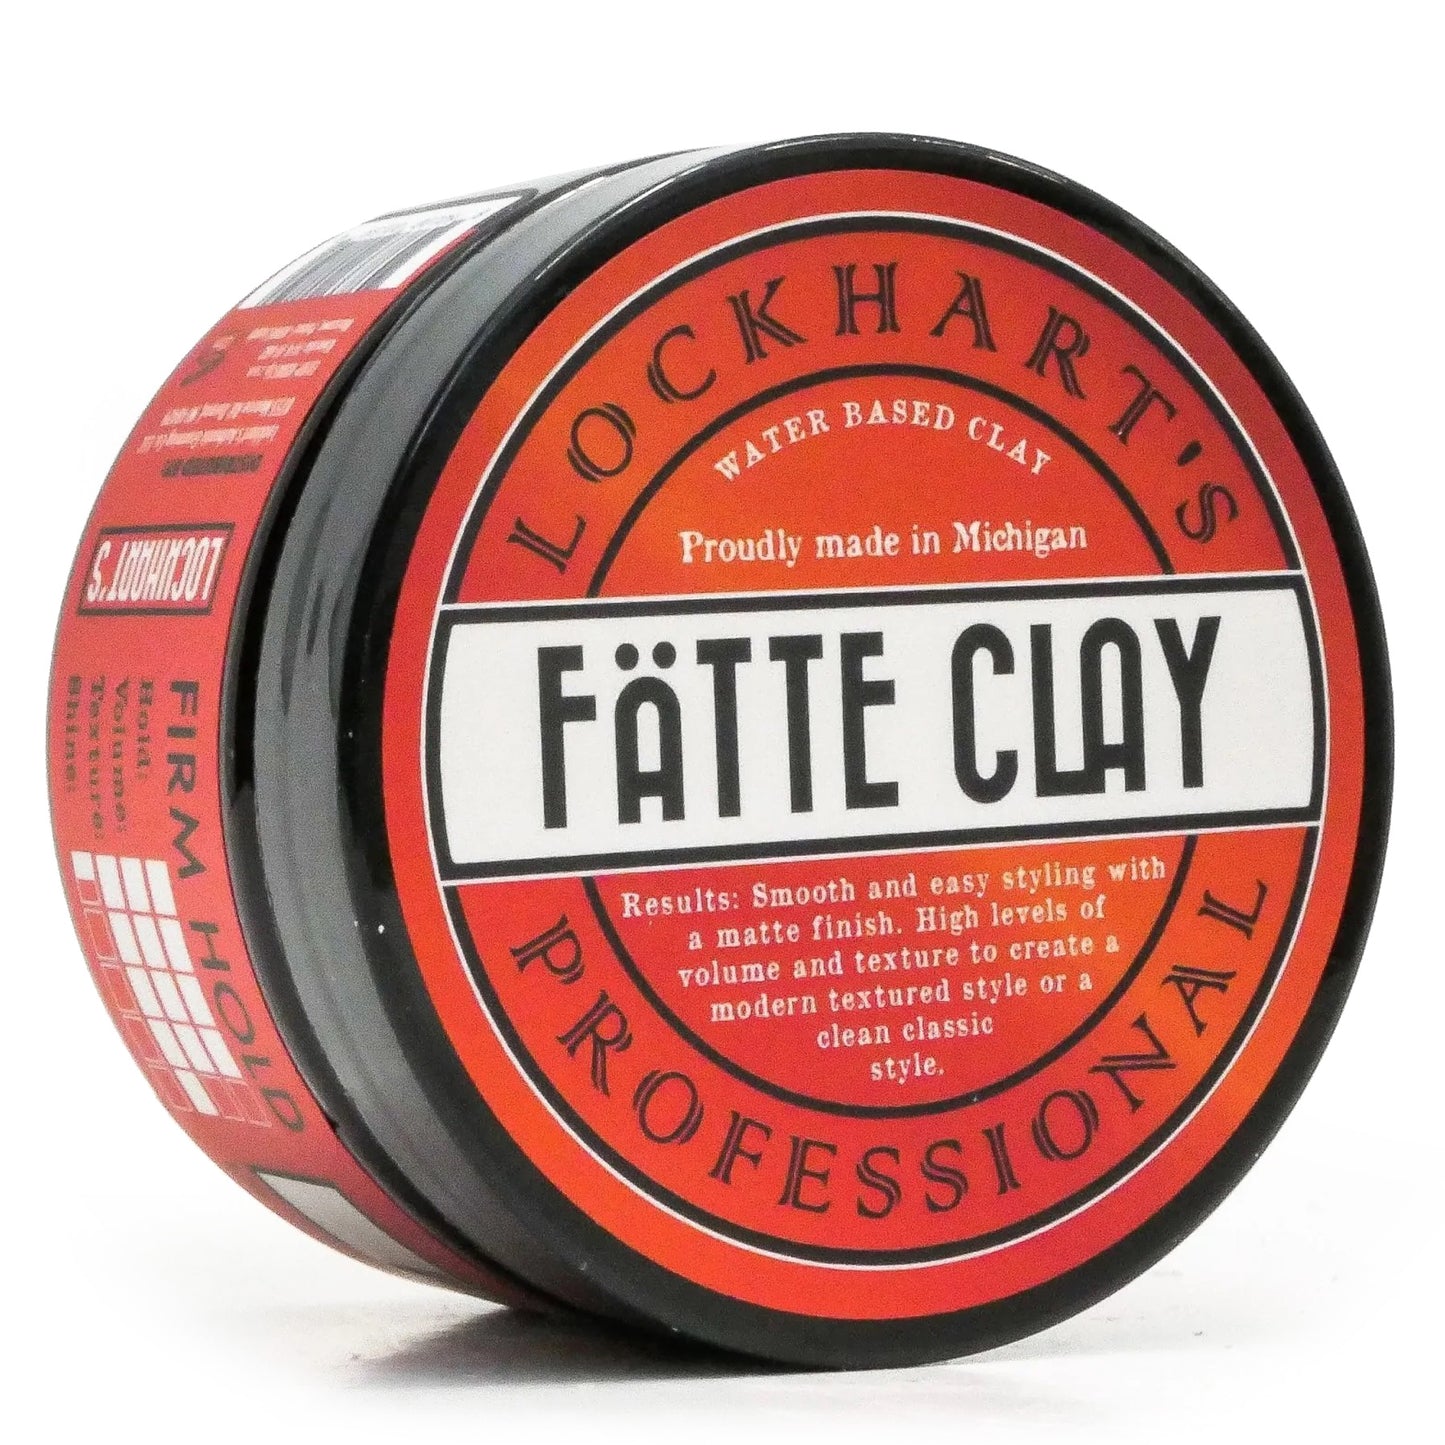 Lockharts fatte clay